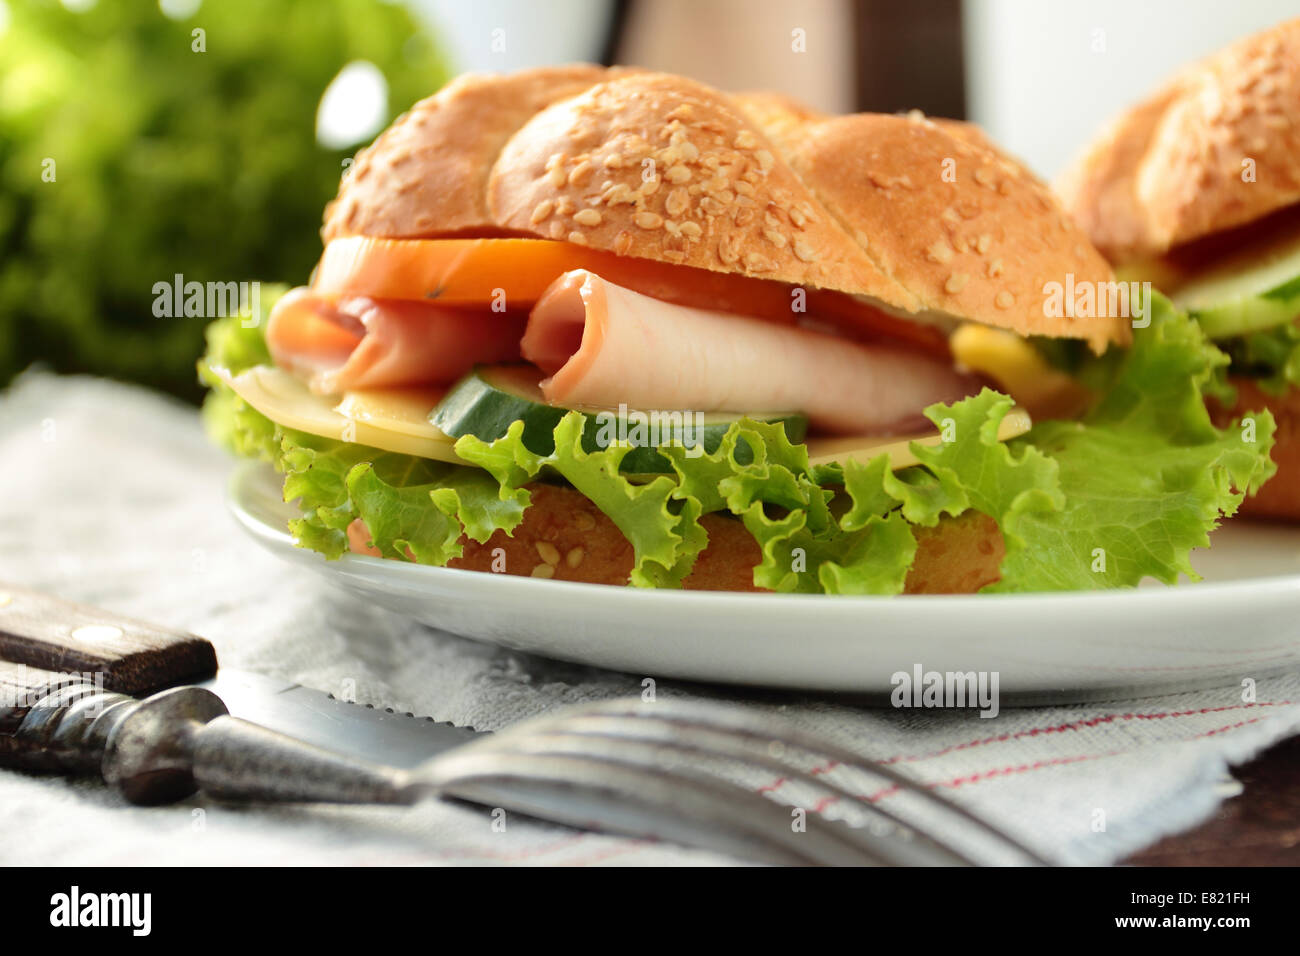 Sándwich con lechuga fresca, tomate, jamón y queso Foto de stock